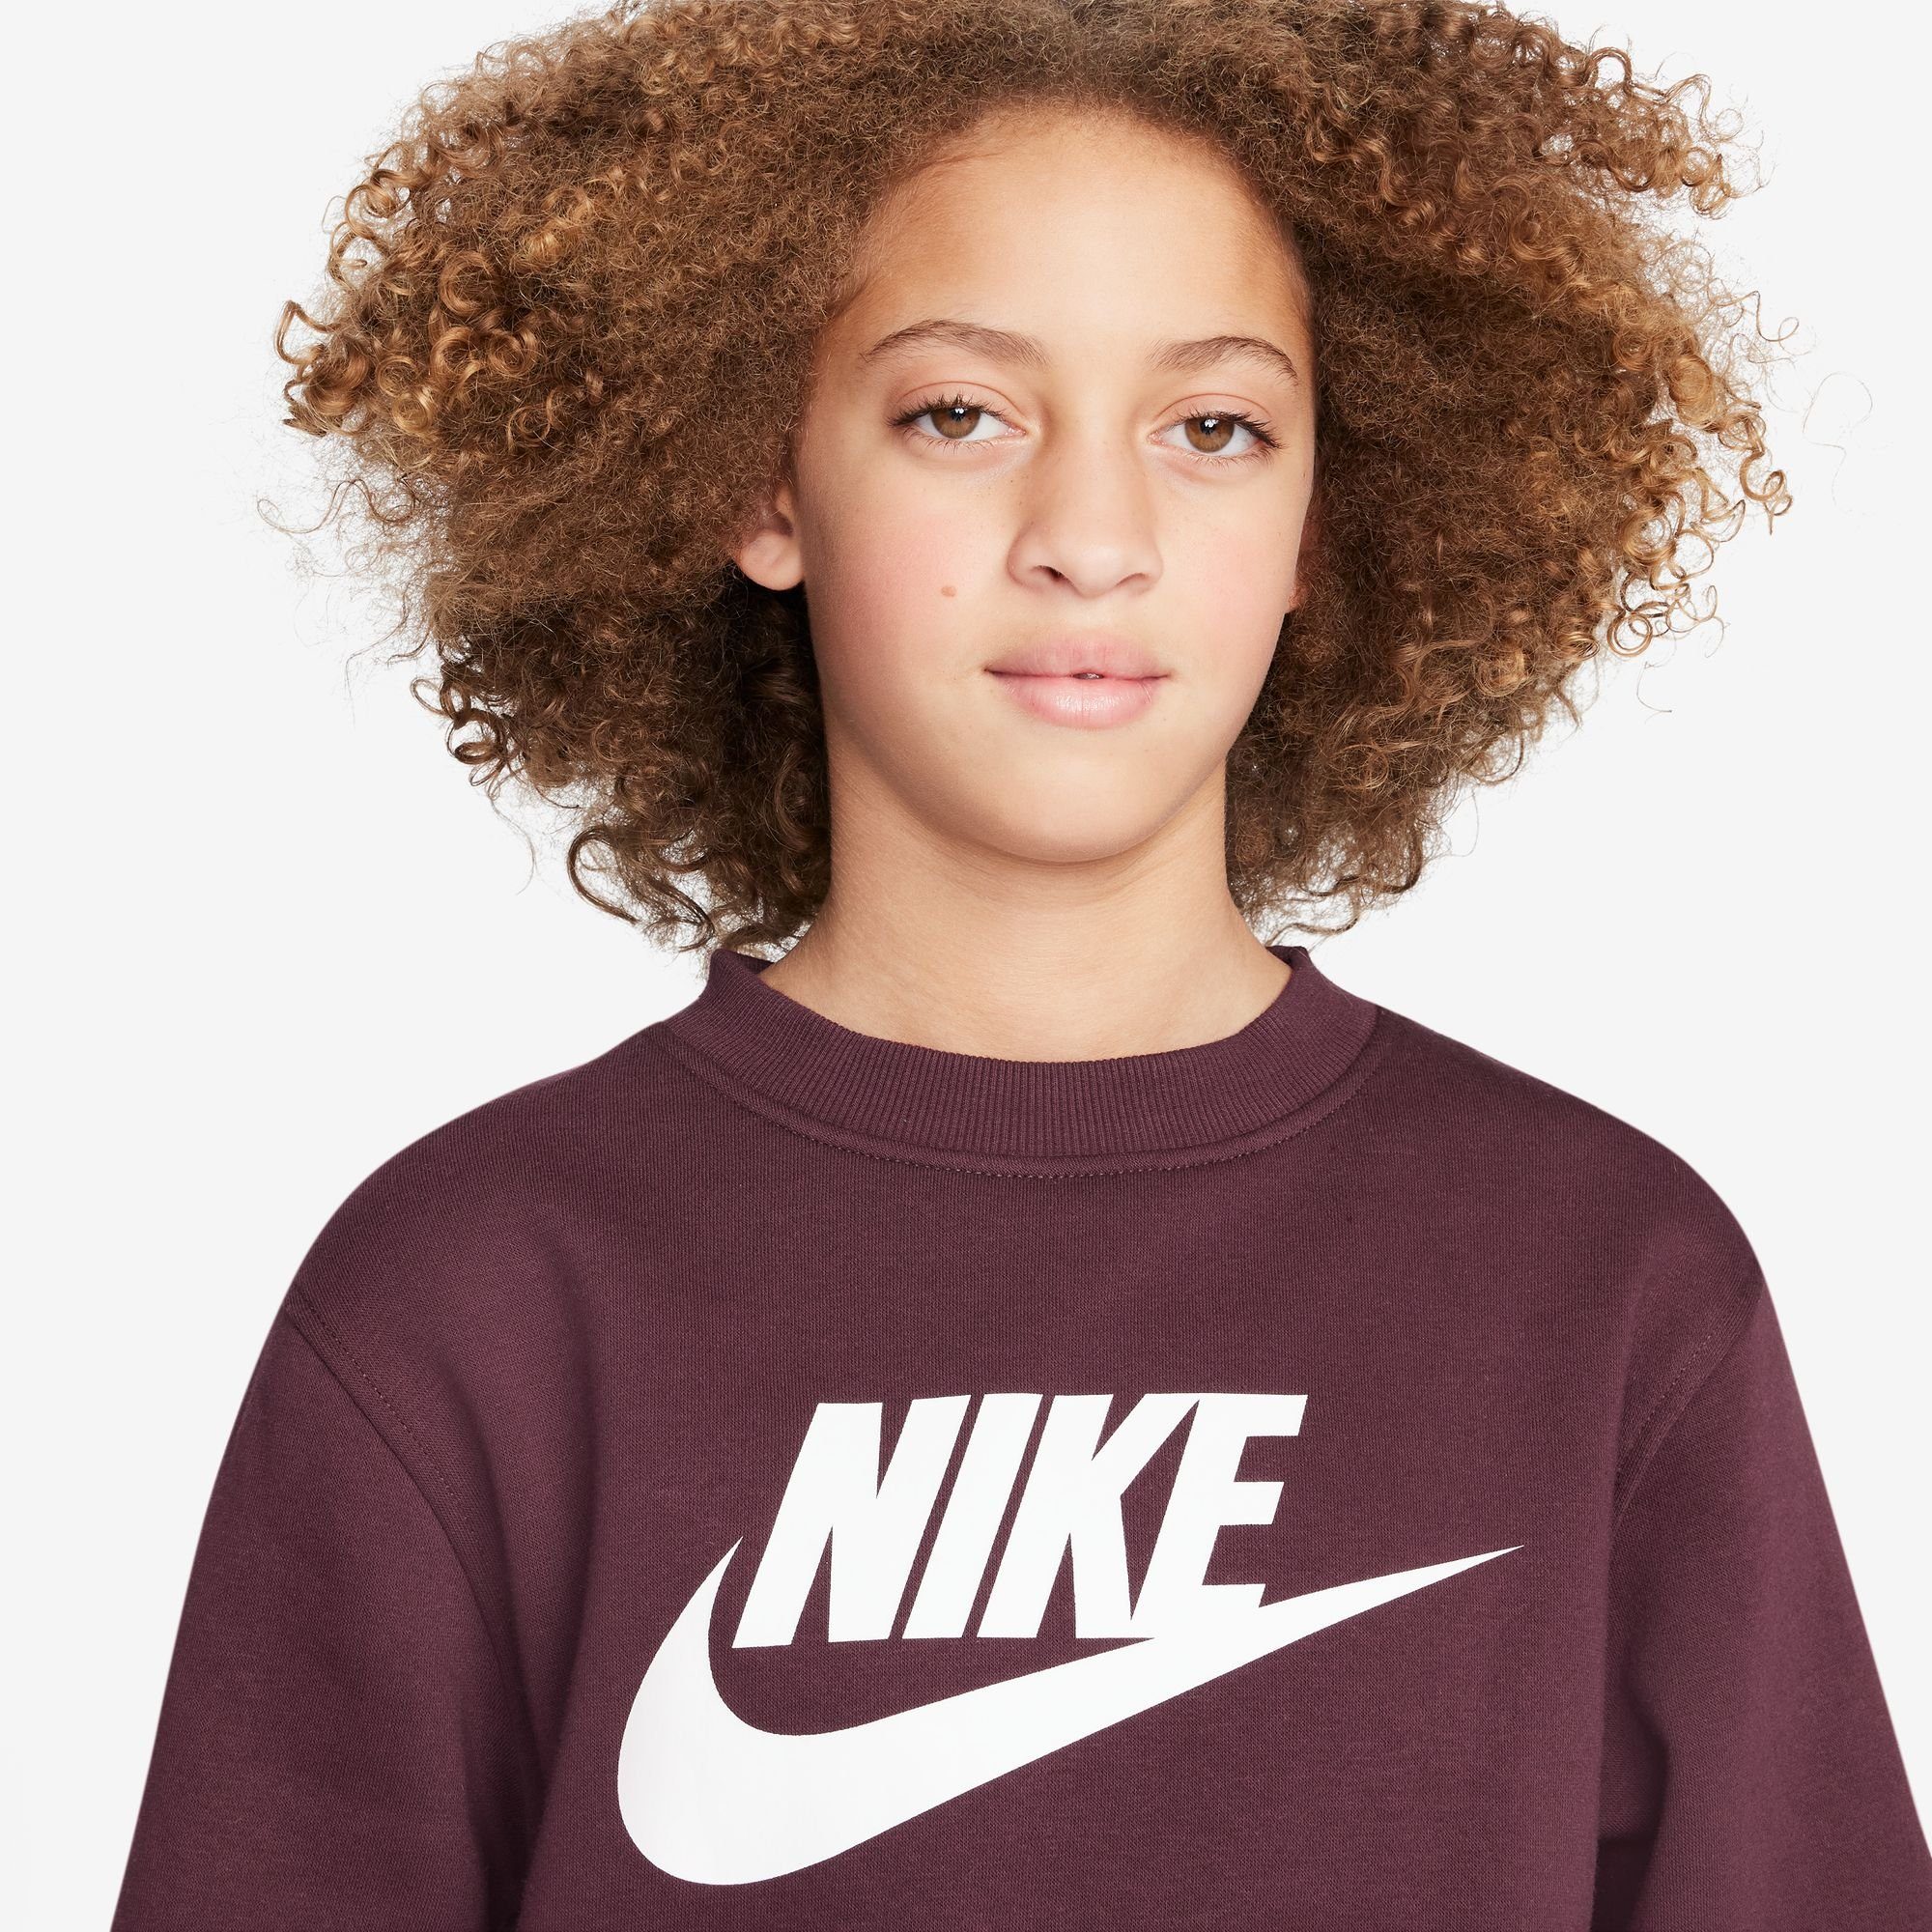 CLUB Nike Sportswear FLEECE SWEATSHIRT NIGHT Sweatshirt MAROON/WHITE BIG KIDS'